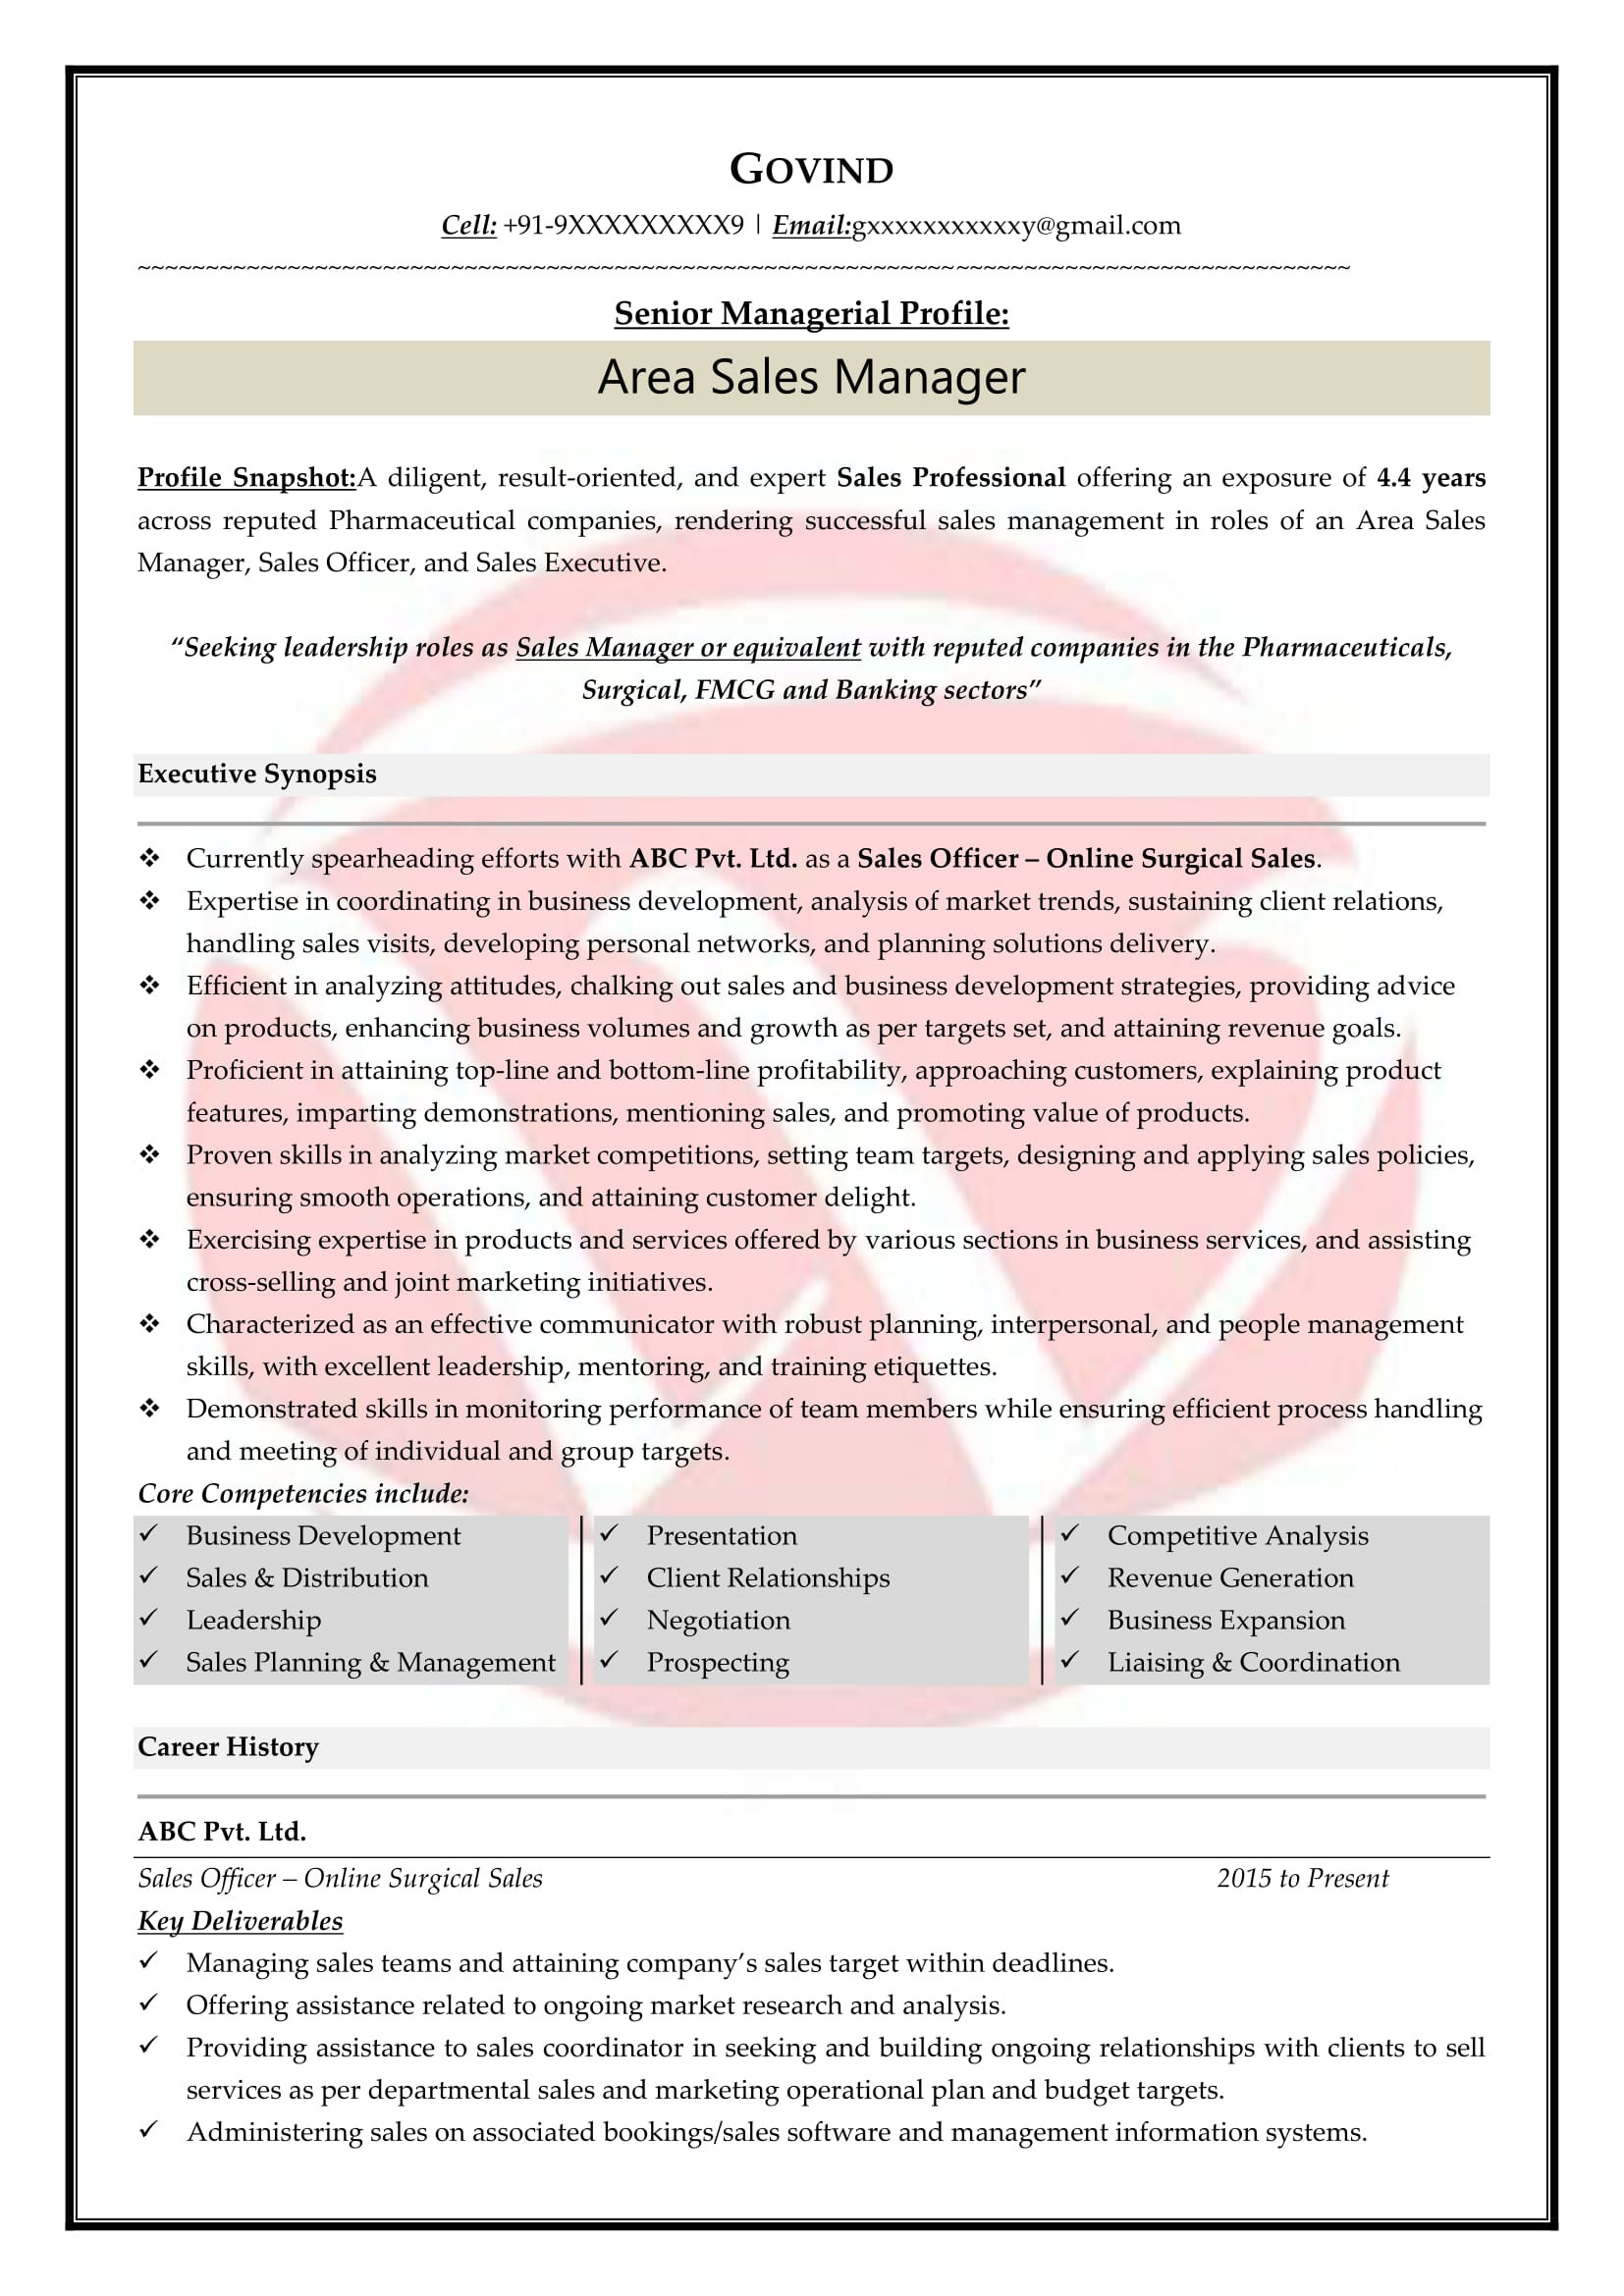 Sales and Marketing Resume Sample Pdf Sales Sample Resumes, Download Resume format Templates!